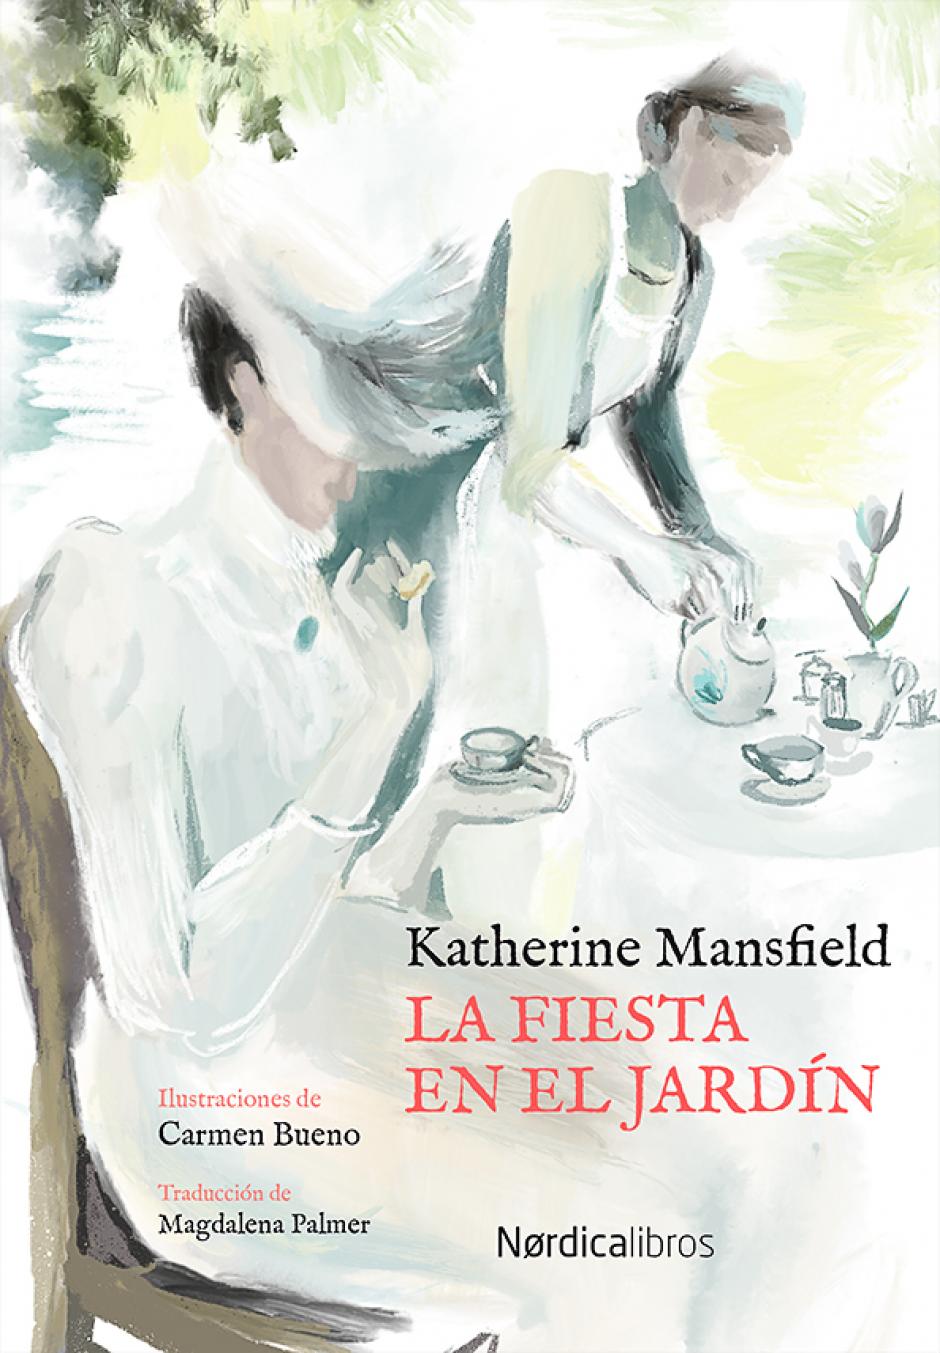 La fiesta en el jardín de Katherine Mansfield